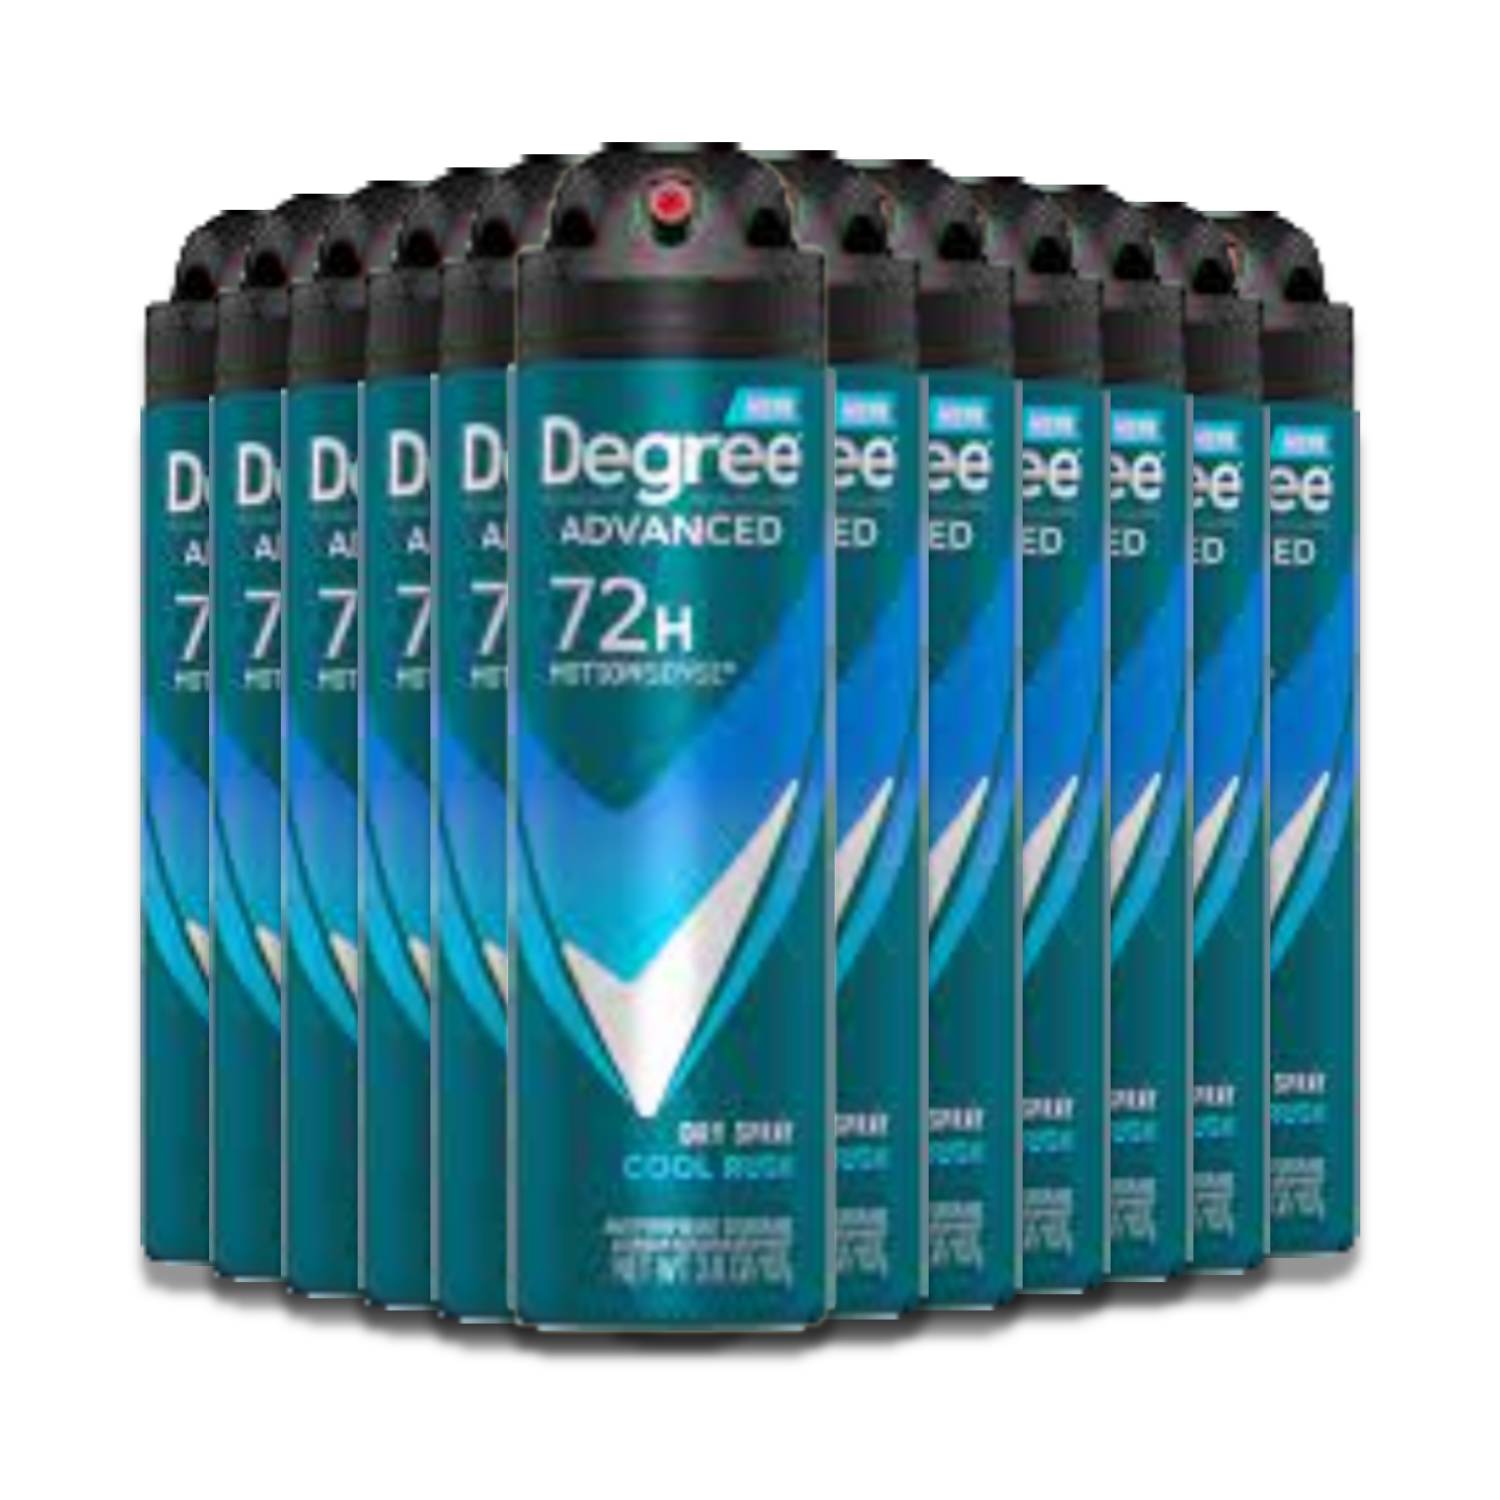 Degree, Advanced 72H MotionSense, Antiperspirant Deodorant, Dry Spray, Cool Rush, 3.8 Oz- 12 Pack